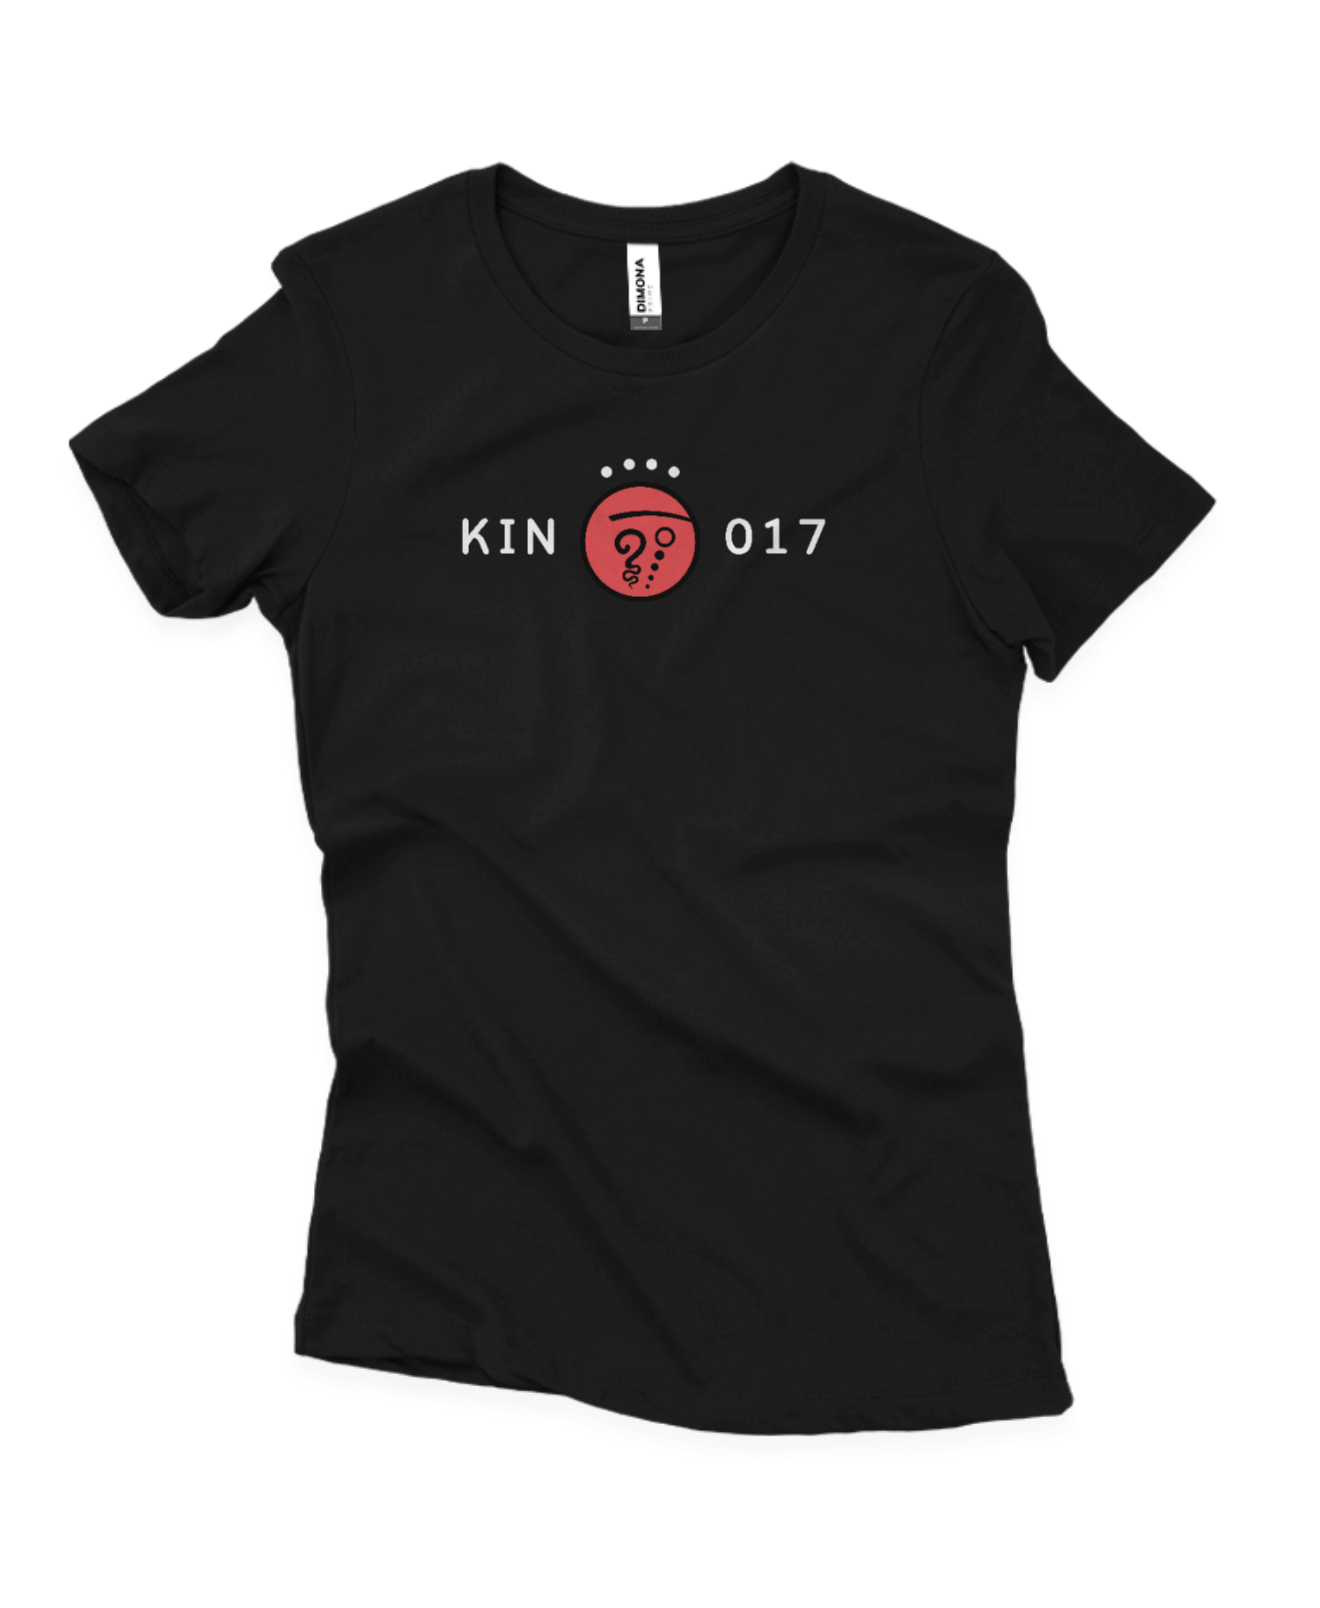 Mockup Camisa Preta - Camisa Feminina Kin 017 - Terra Autoexistente Vermelha - Kin 17